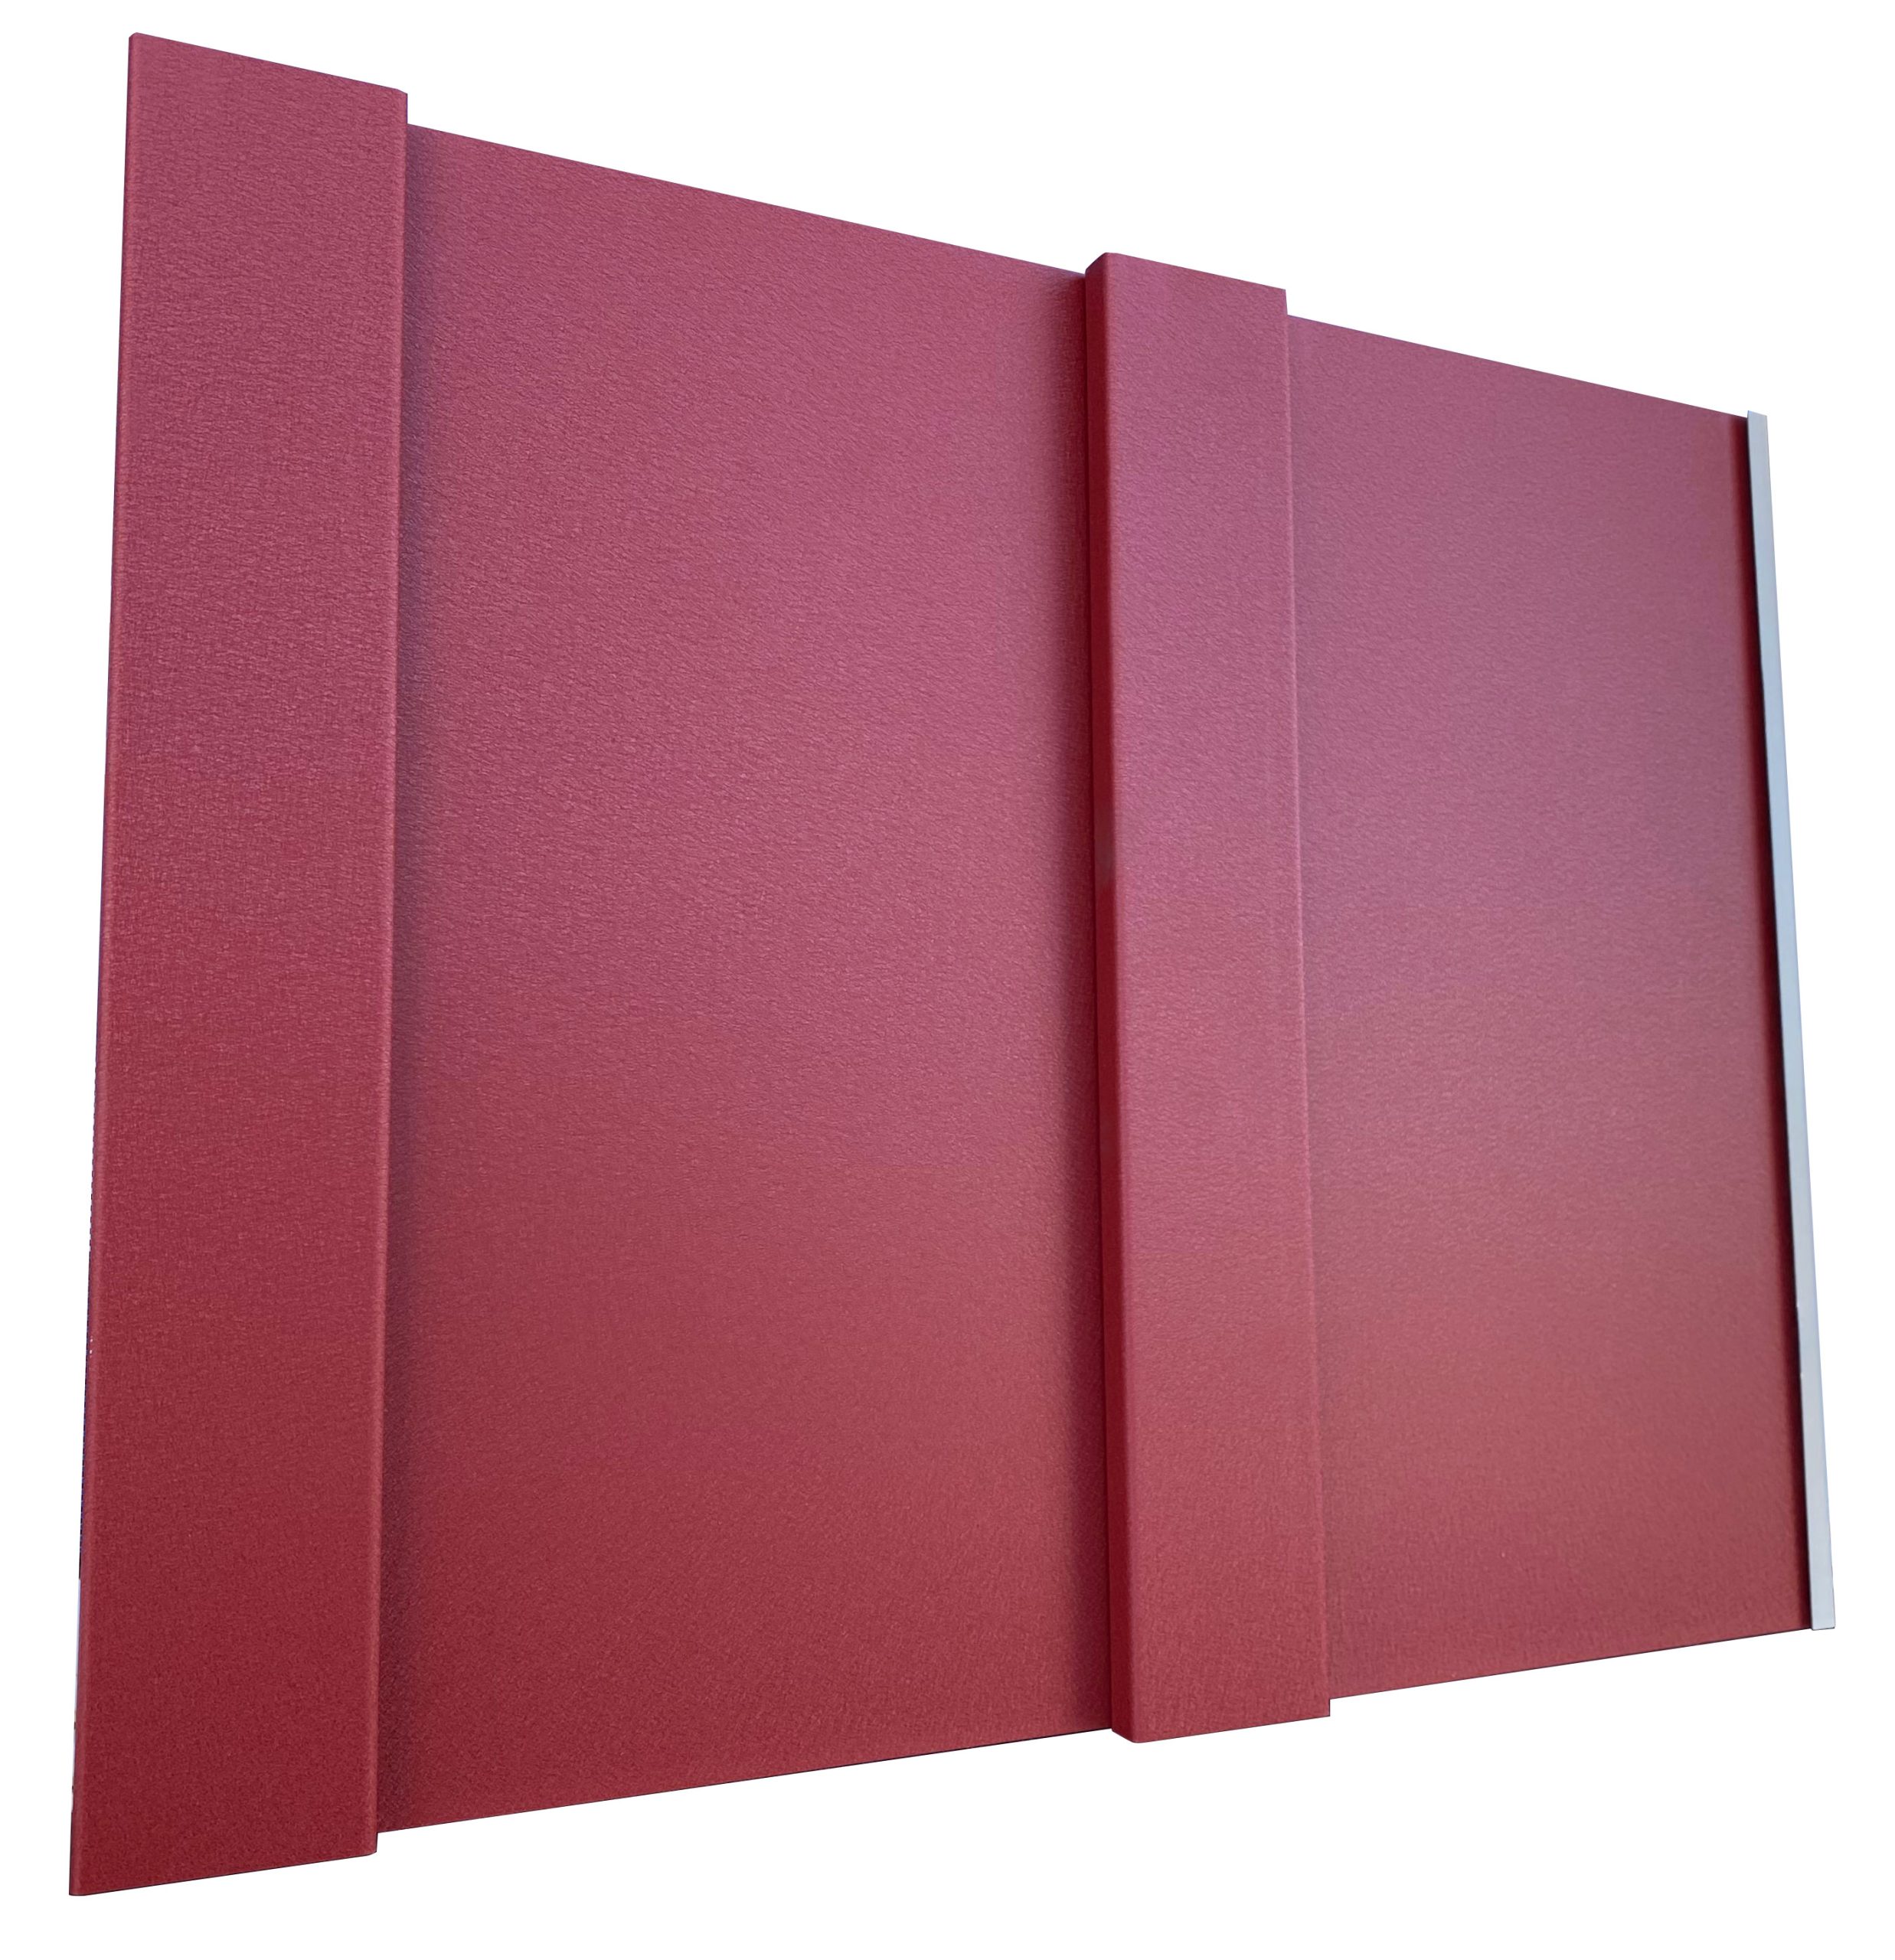 Textured Red Oxide Board & Batten